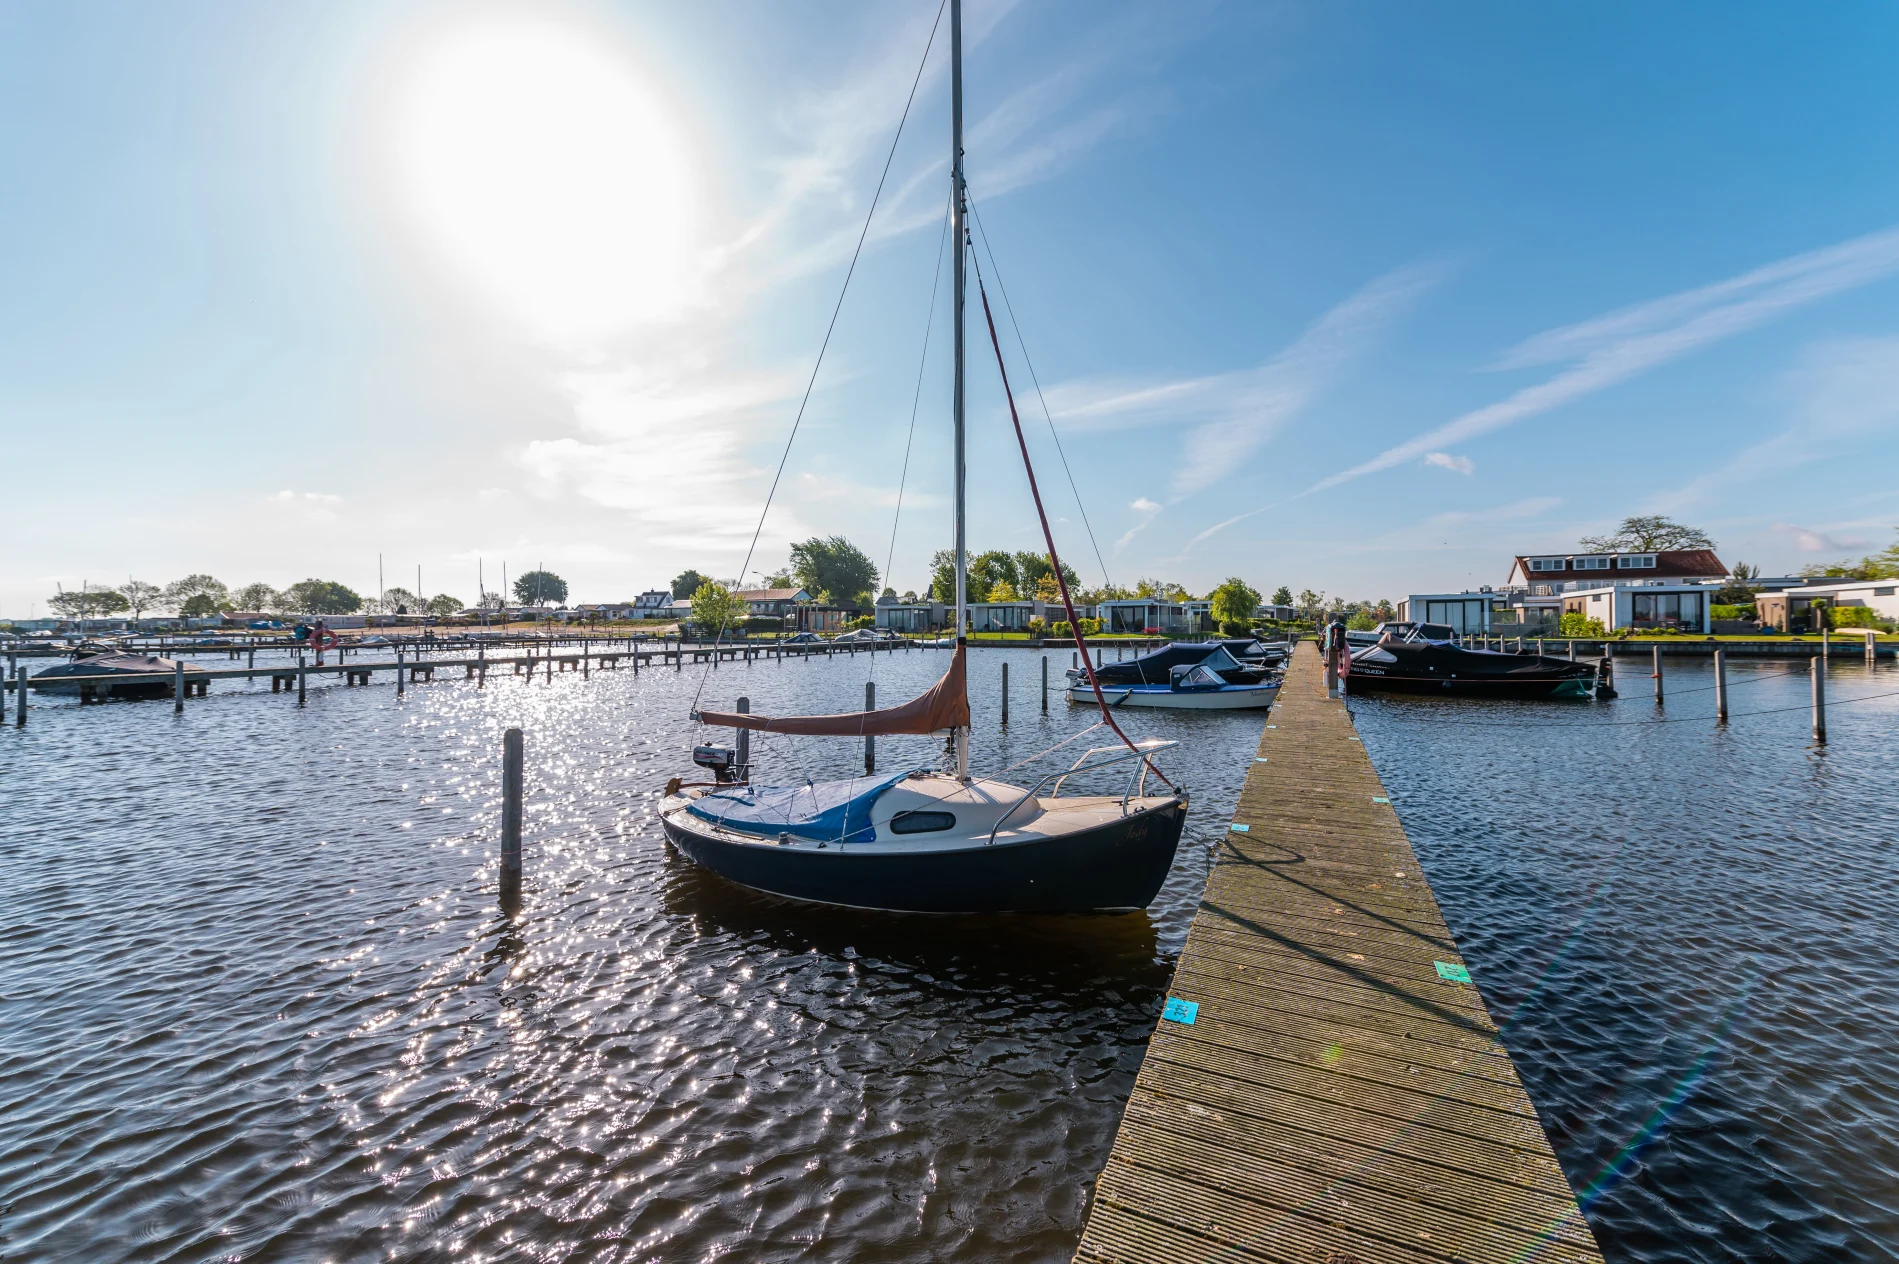 EuroParcs Holiday Park Veluwemeer Nunspeet Veluwe See Boot Wasser Sonne Steg